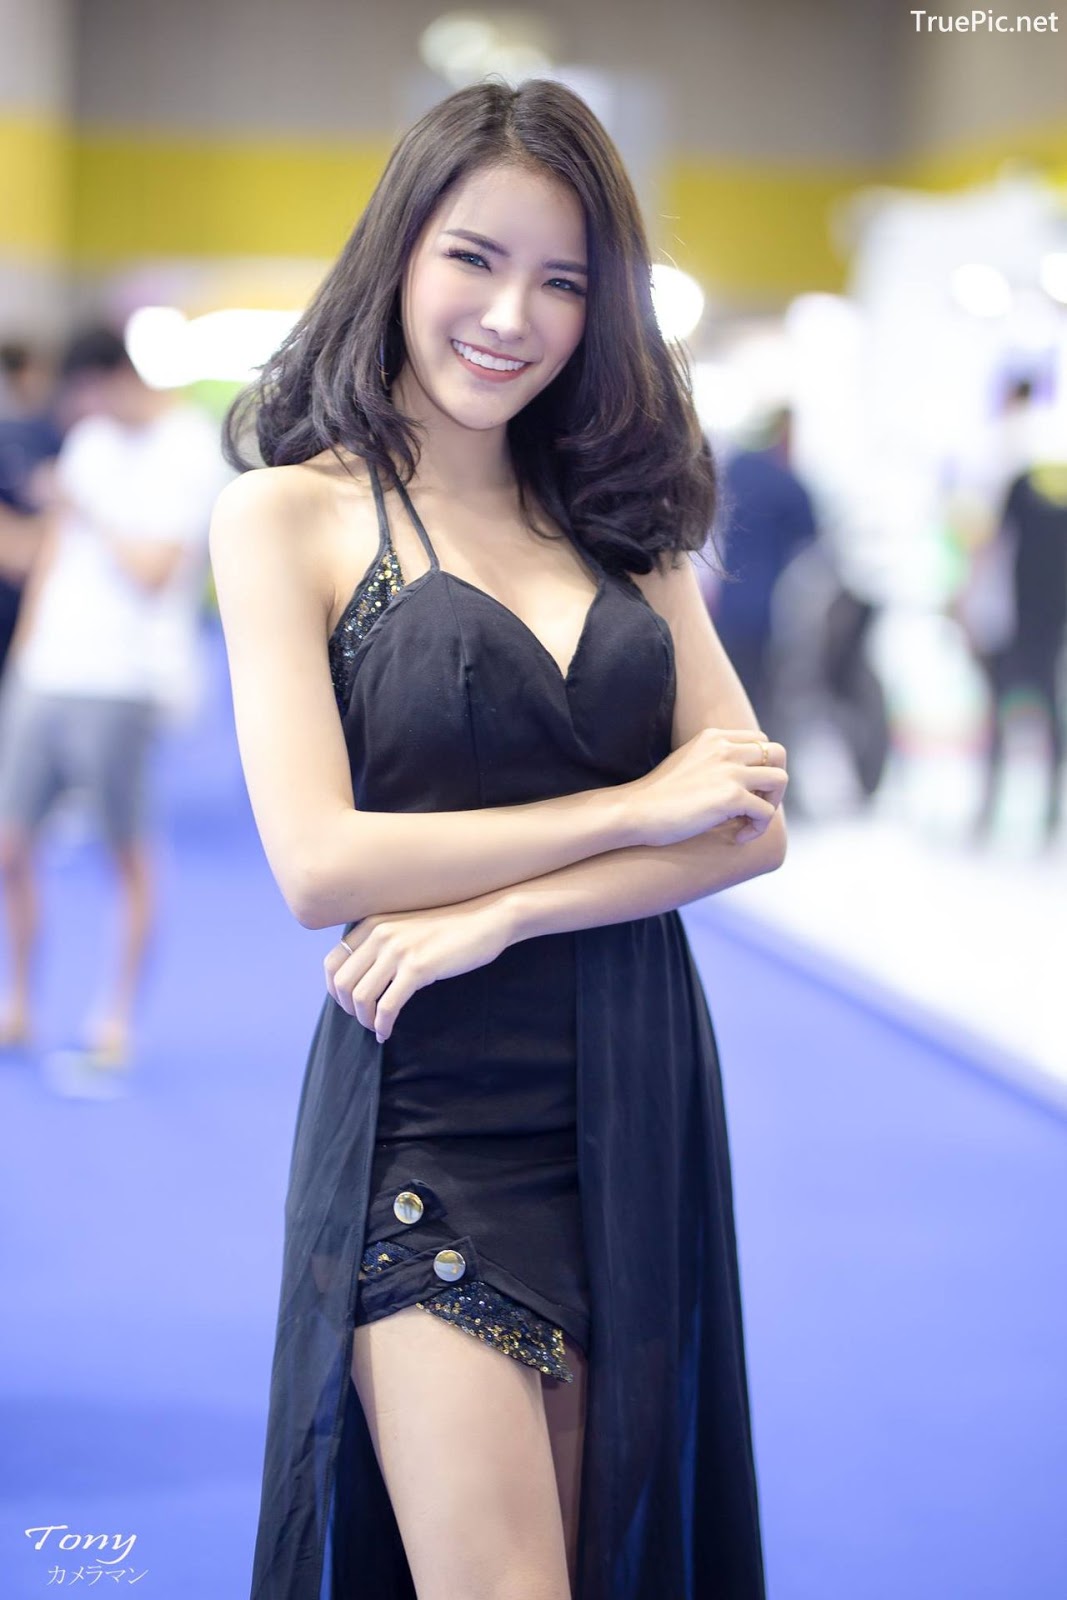 Image-Thailand-Hot-Model-Thai-Racing-Girl-At-Big-Motor-2018-TruePic.net- Picture-17